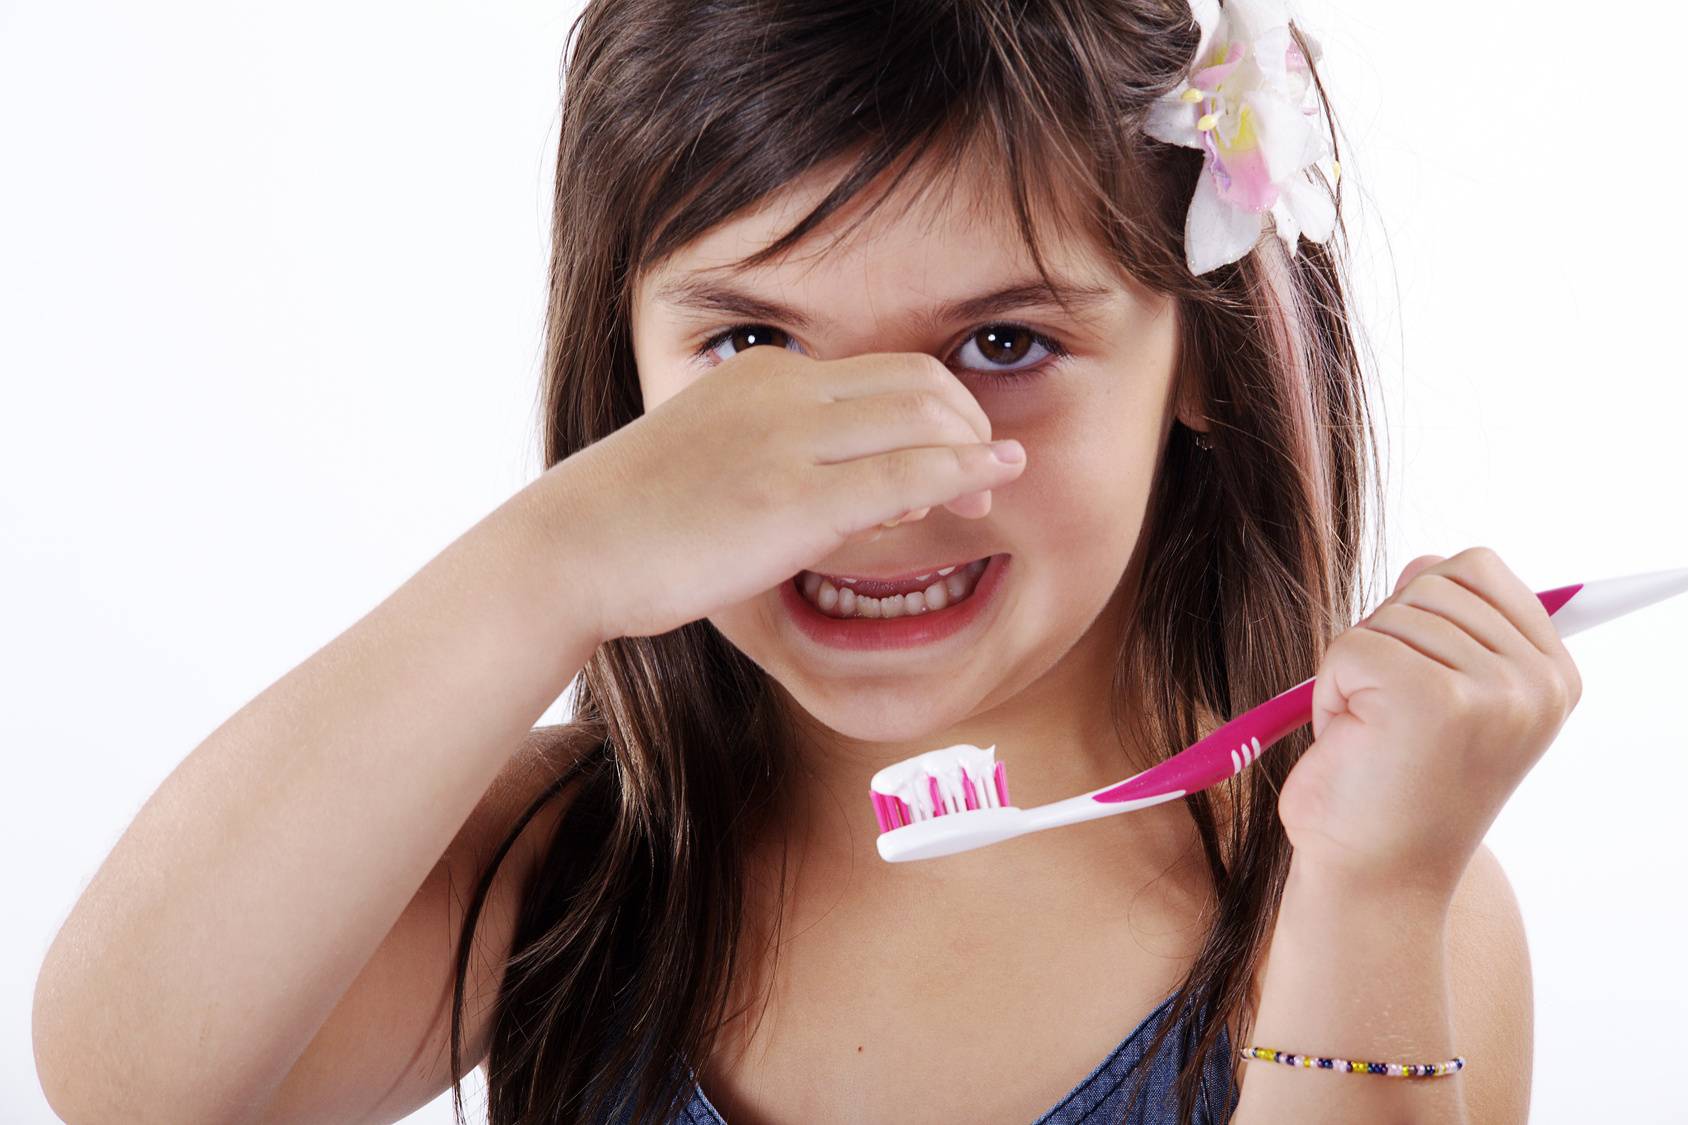 Галитоз запах. Чистим зубы!. Девушка чистит зубы. Ребенок чистит зубы.